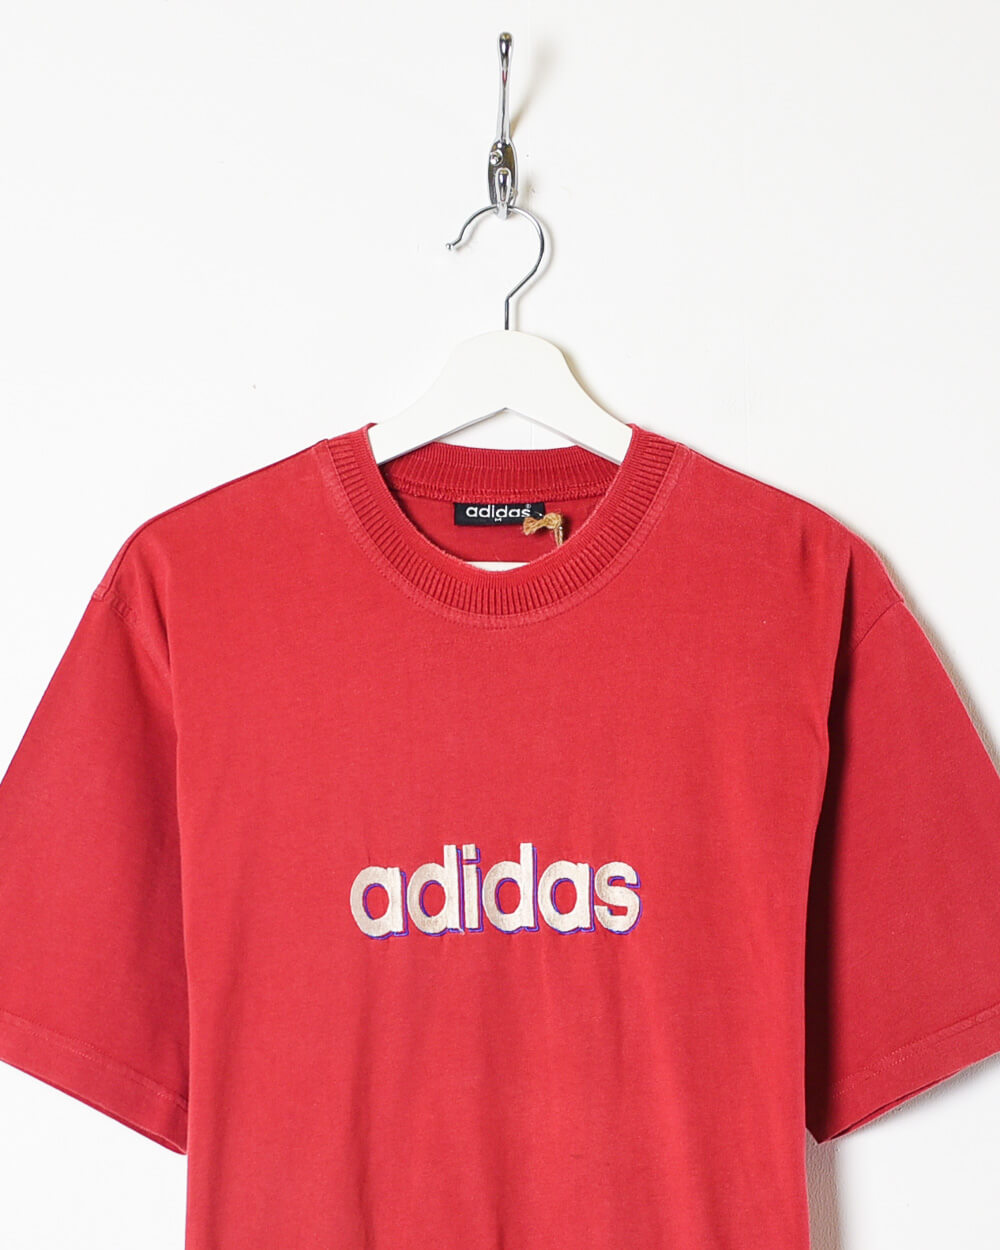 Red Adidas T-Shirt - Medium